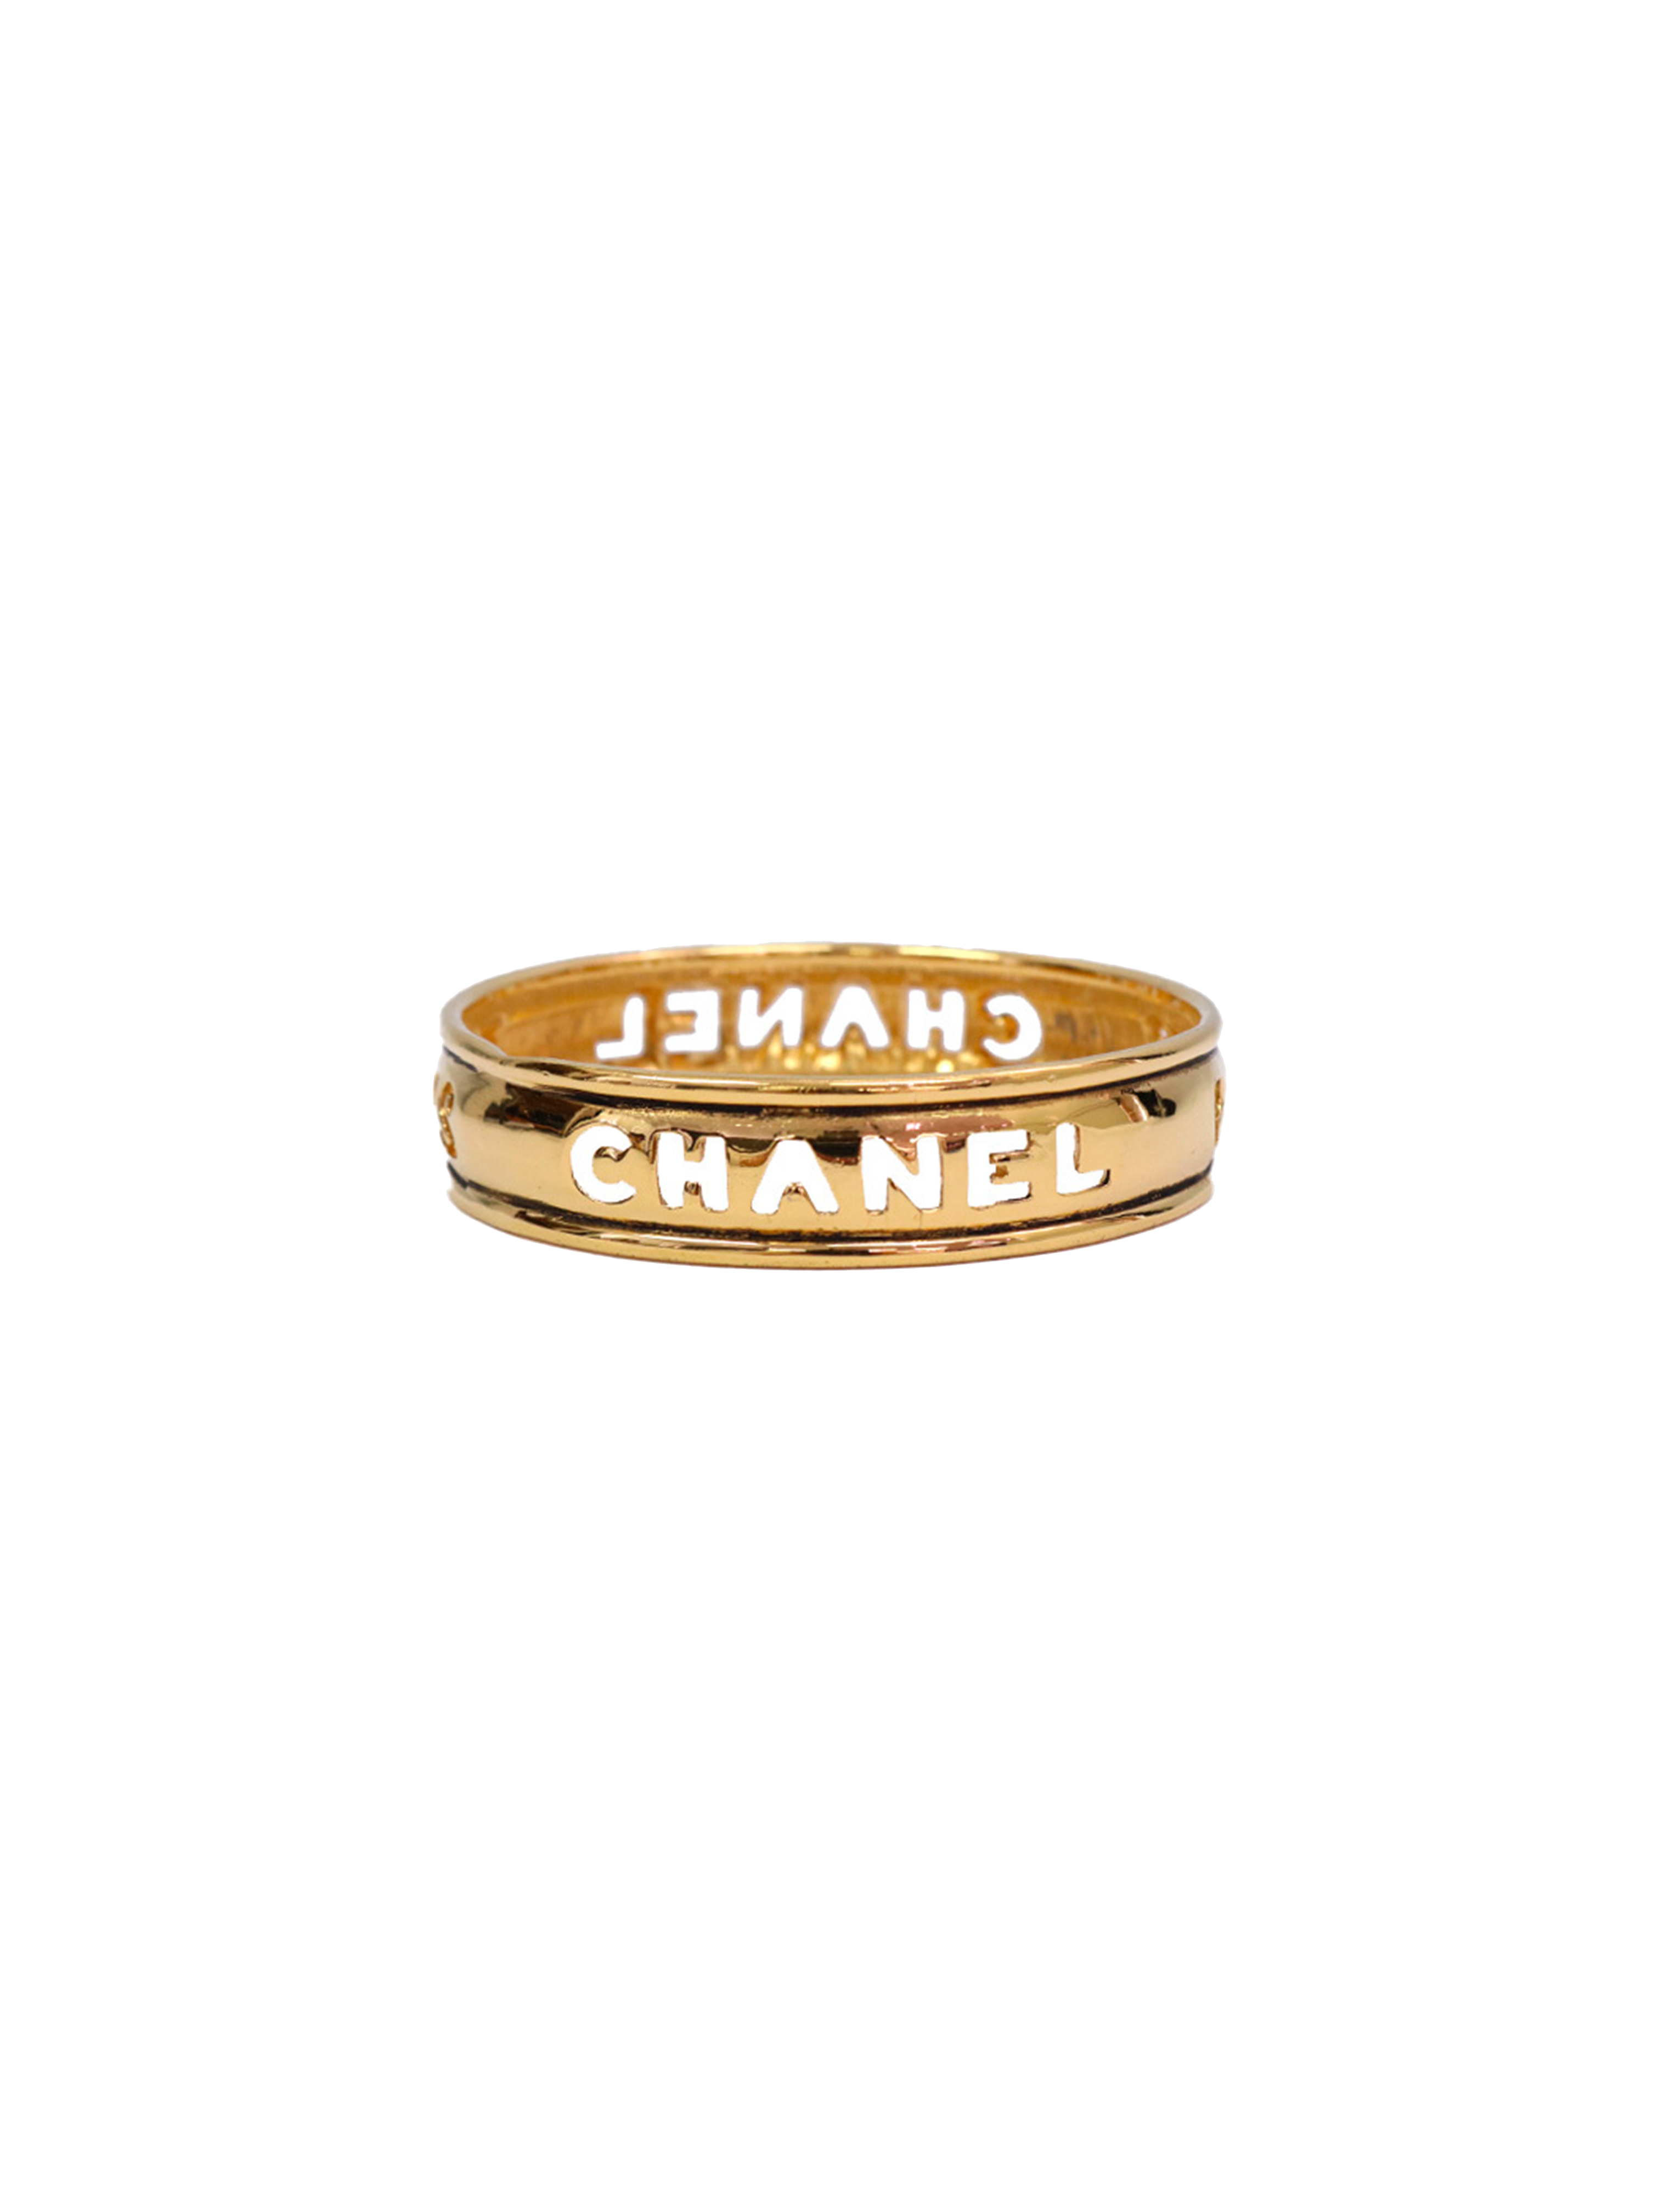 Chanel Gold Ajour Bangle Bracelet Available For Immediate Sale At Sothebys